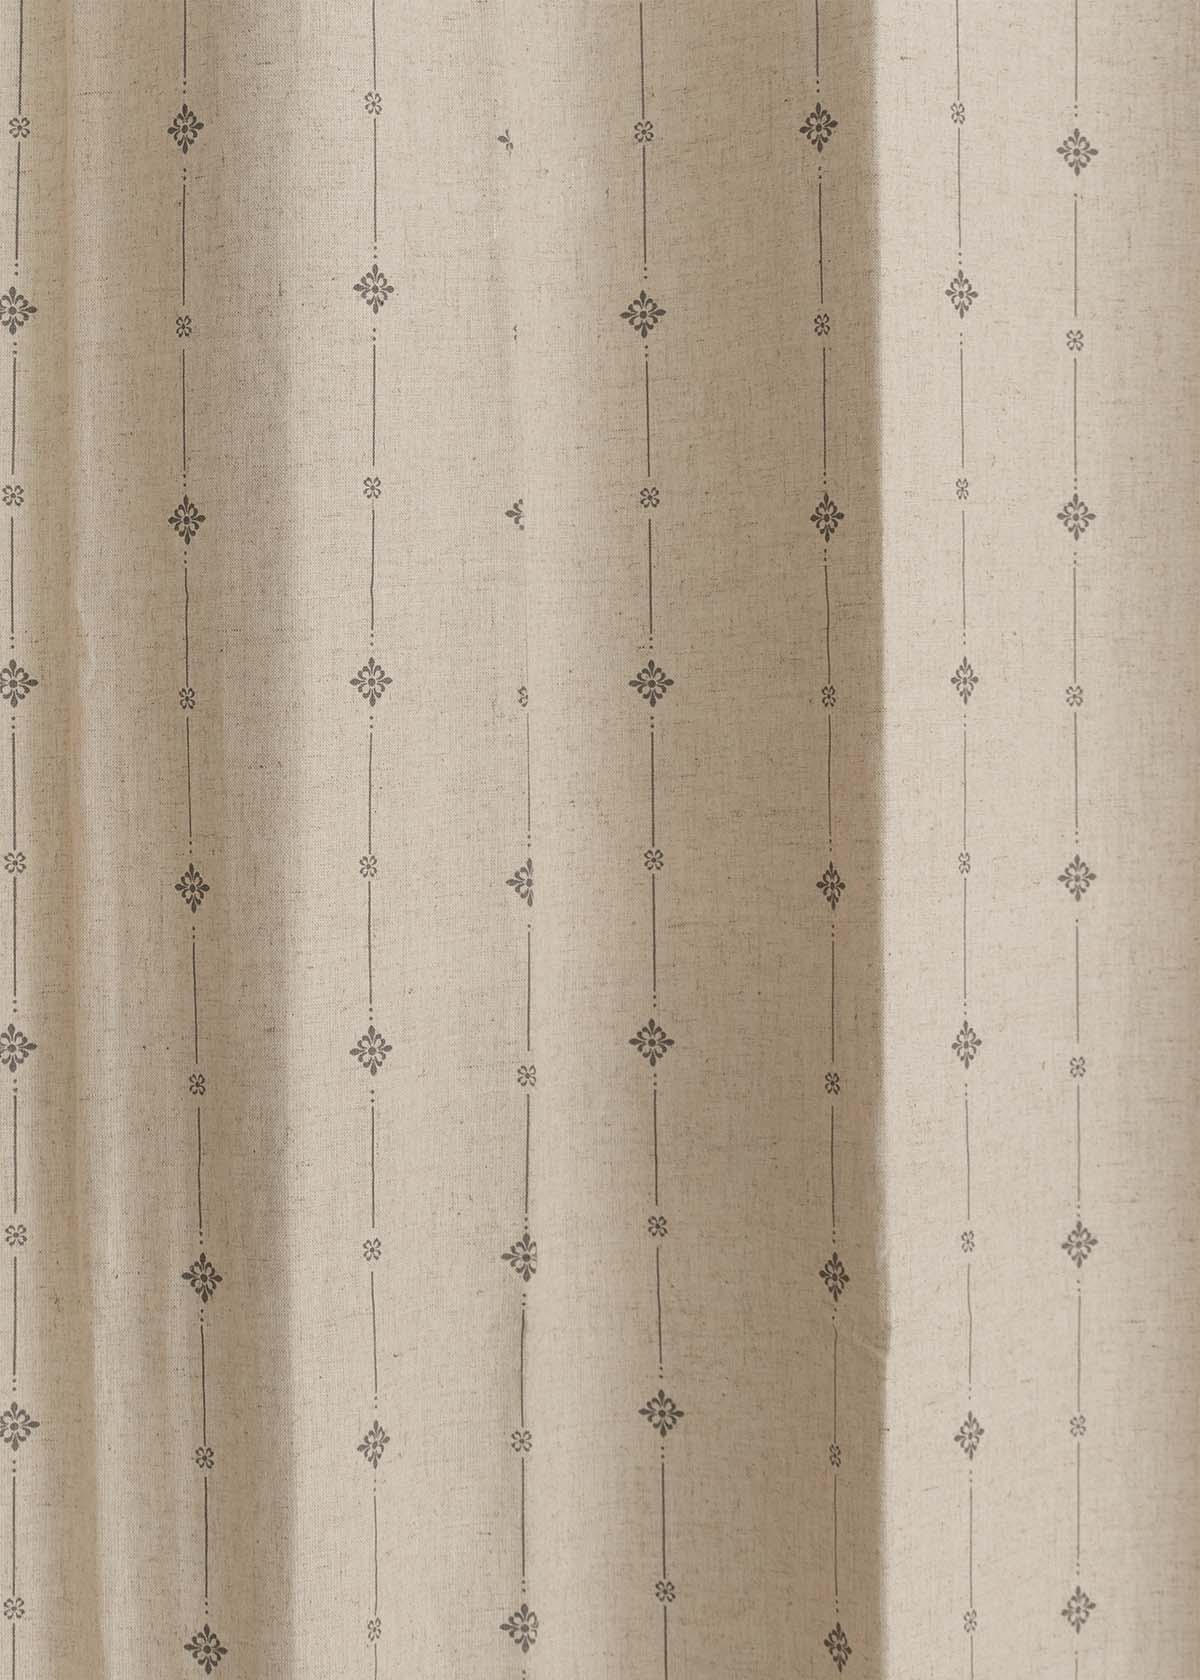 Tulsi linen 100% Customizable Cotton ethnic curtain for Living room & bedroom - Room darkening  - Beige